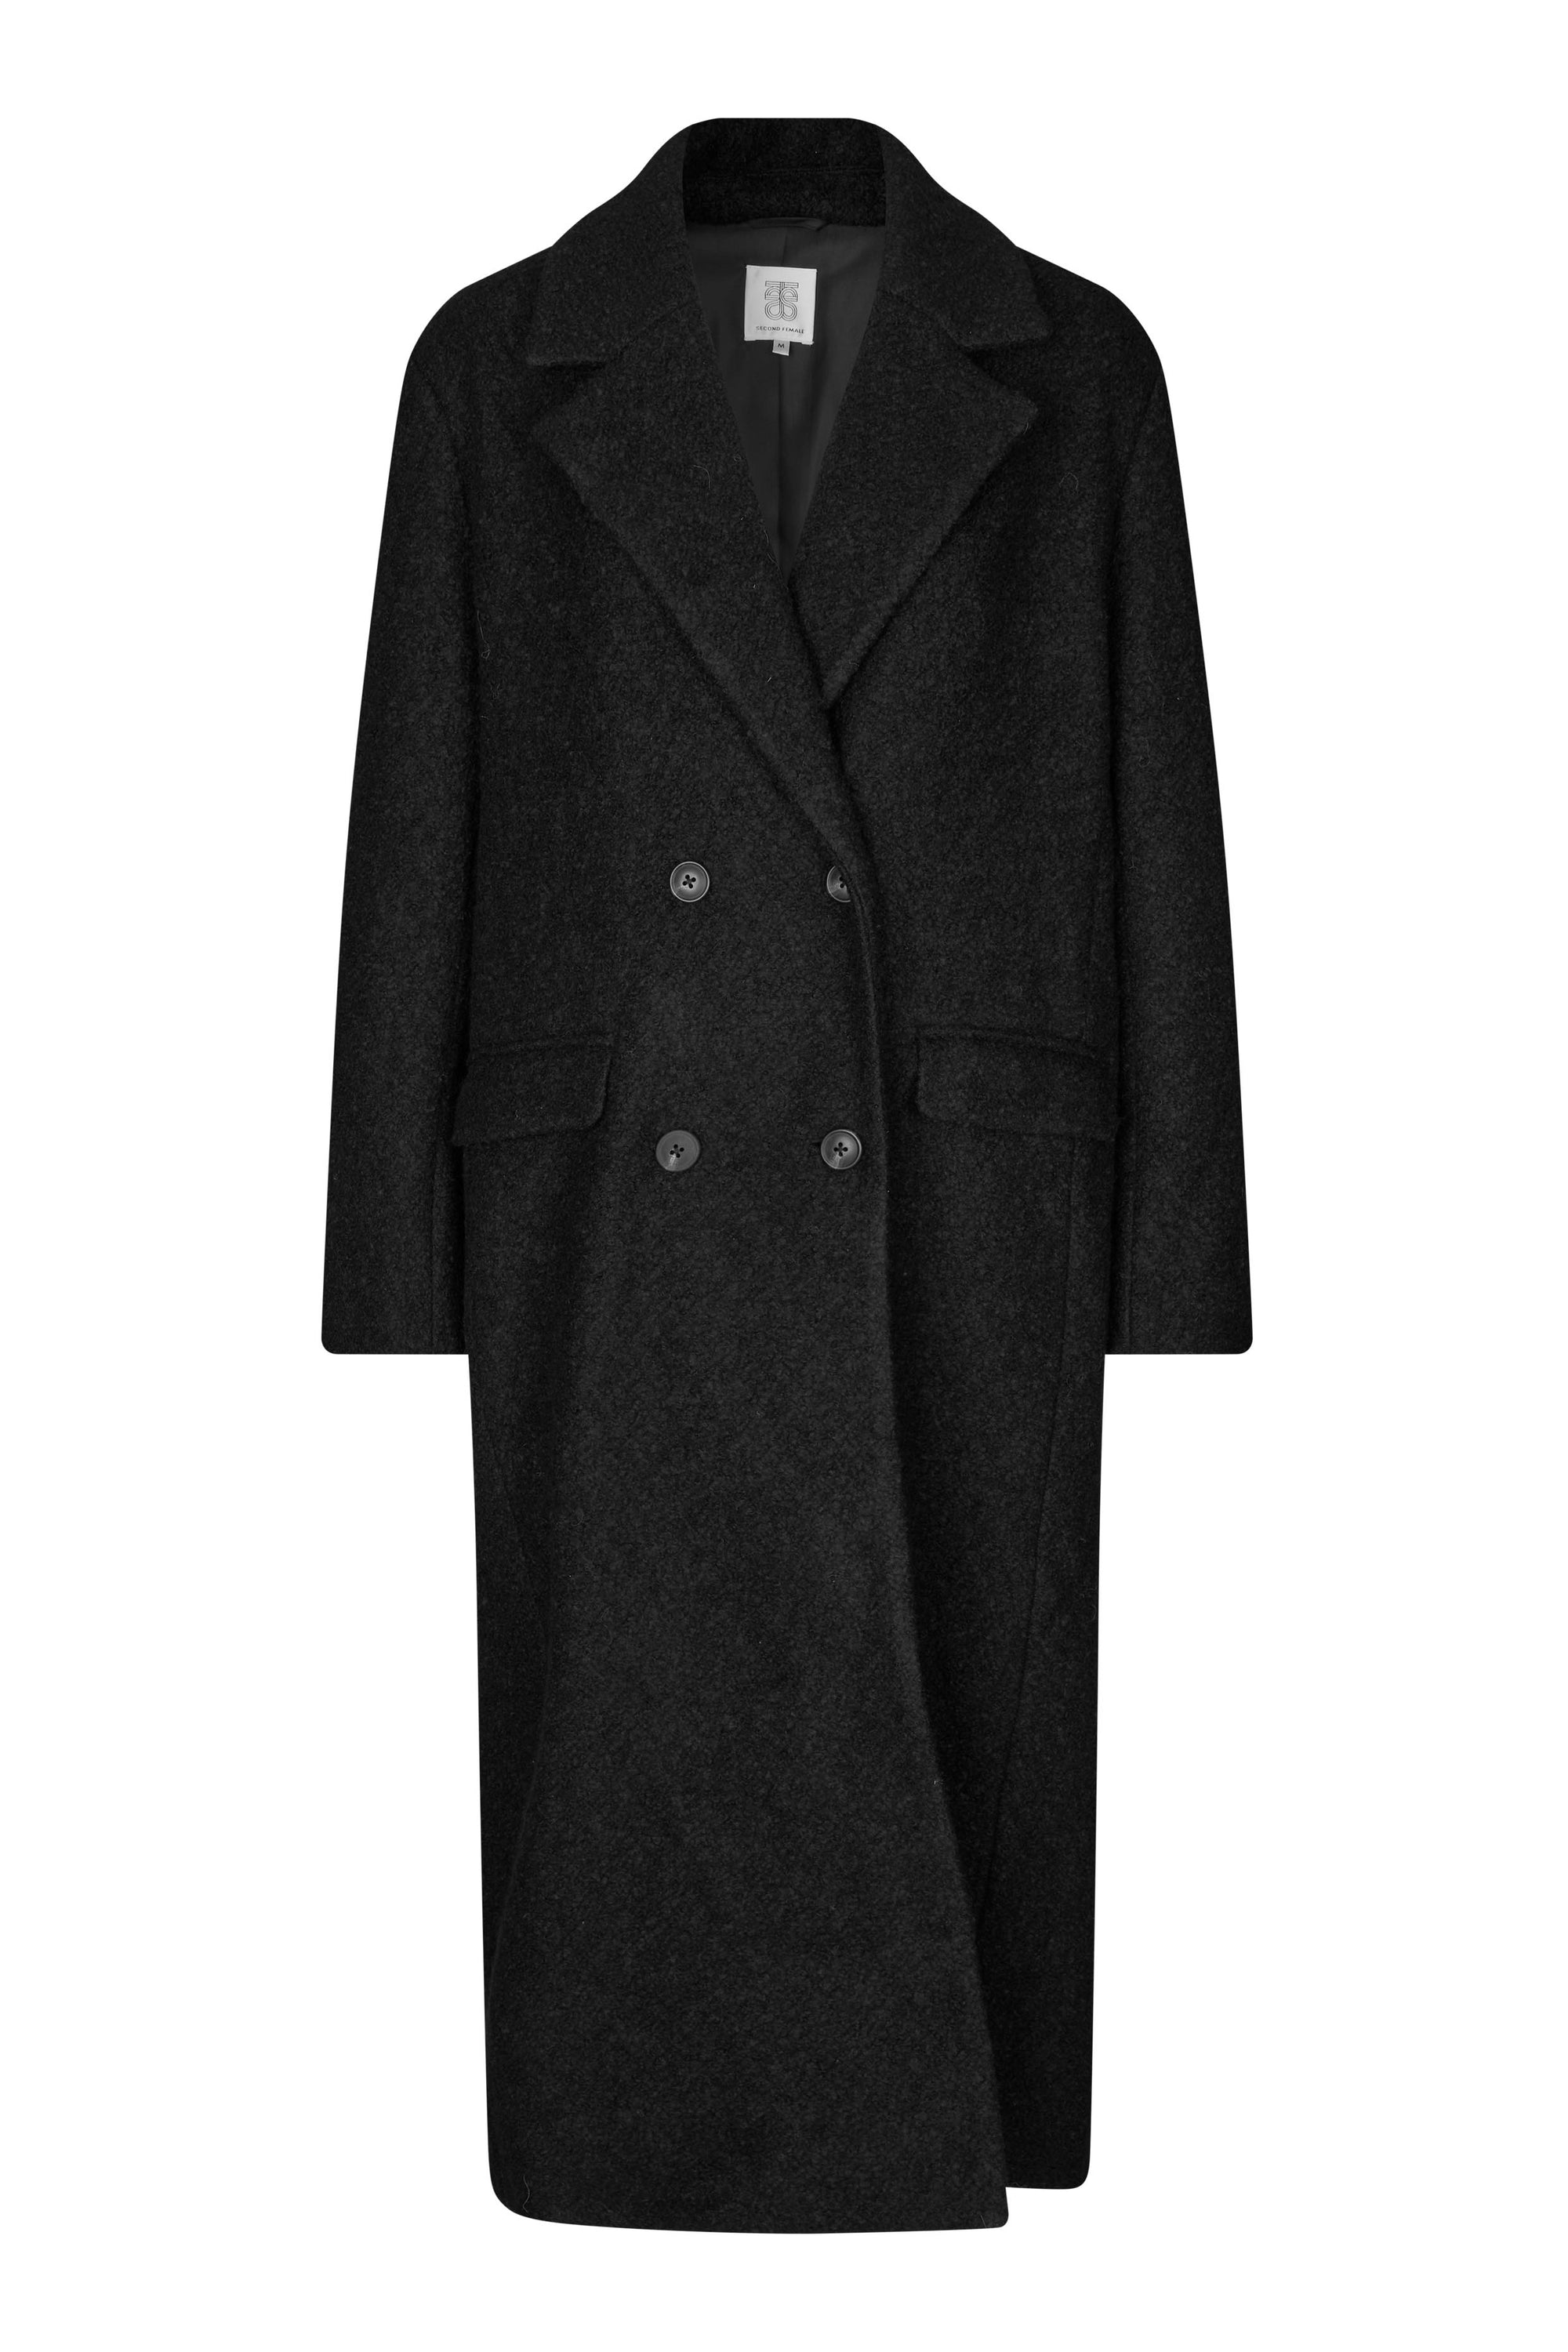 Sherry Coat, Black